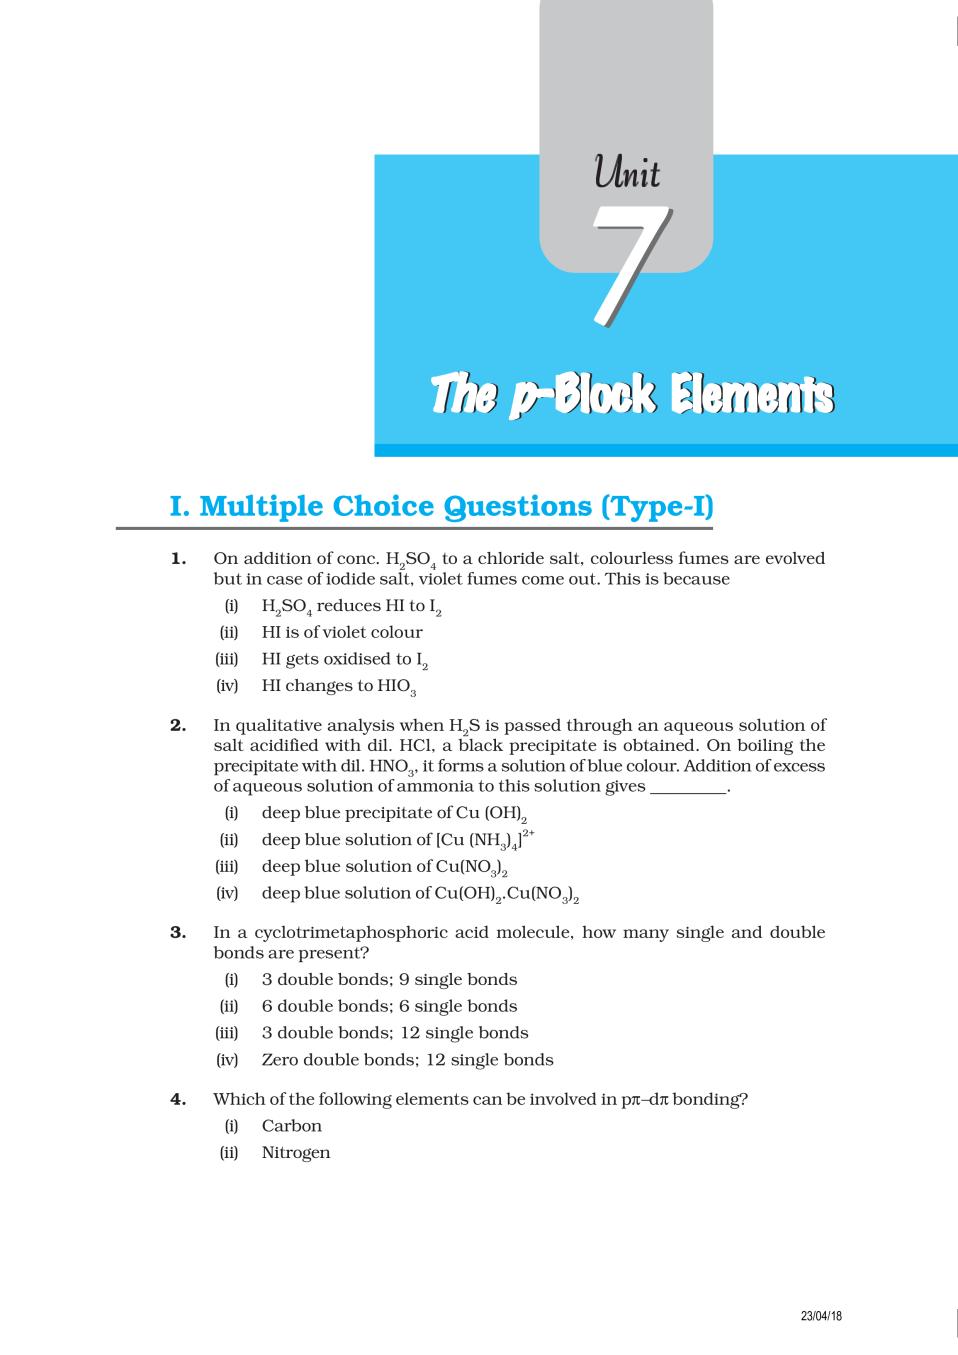 NCERT Exemplar Class 12 Chemistry Unit 7 The p-block Elements - Page 1